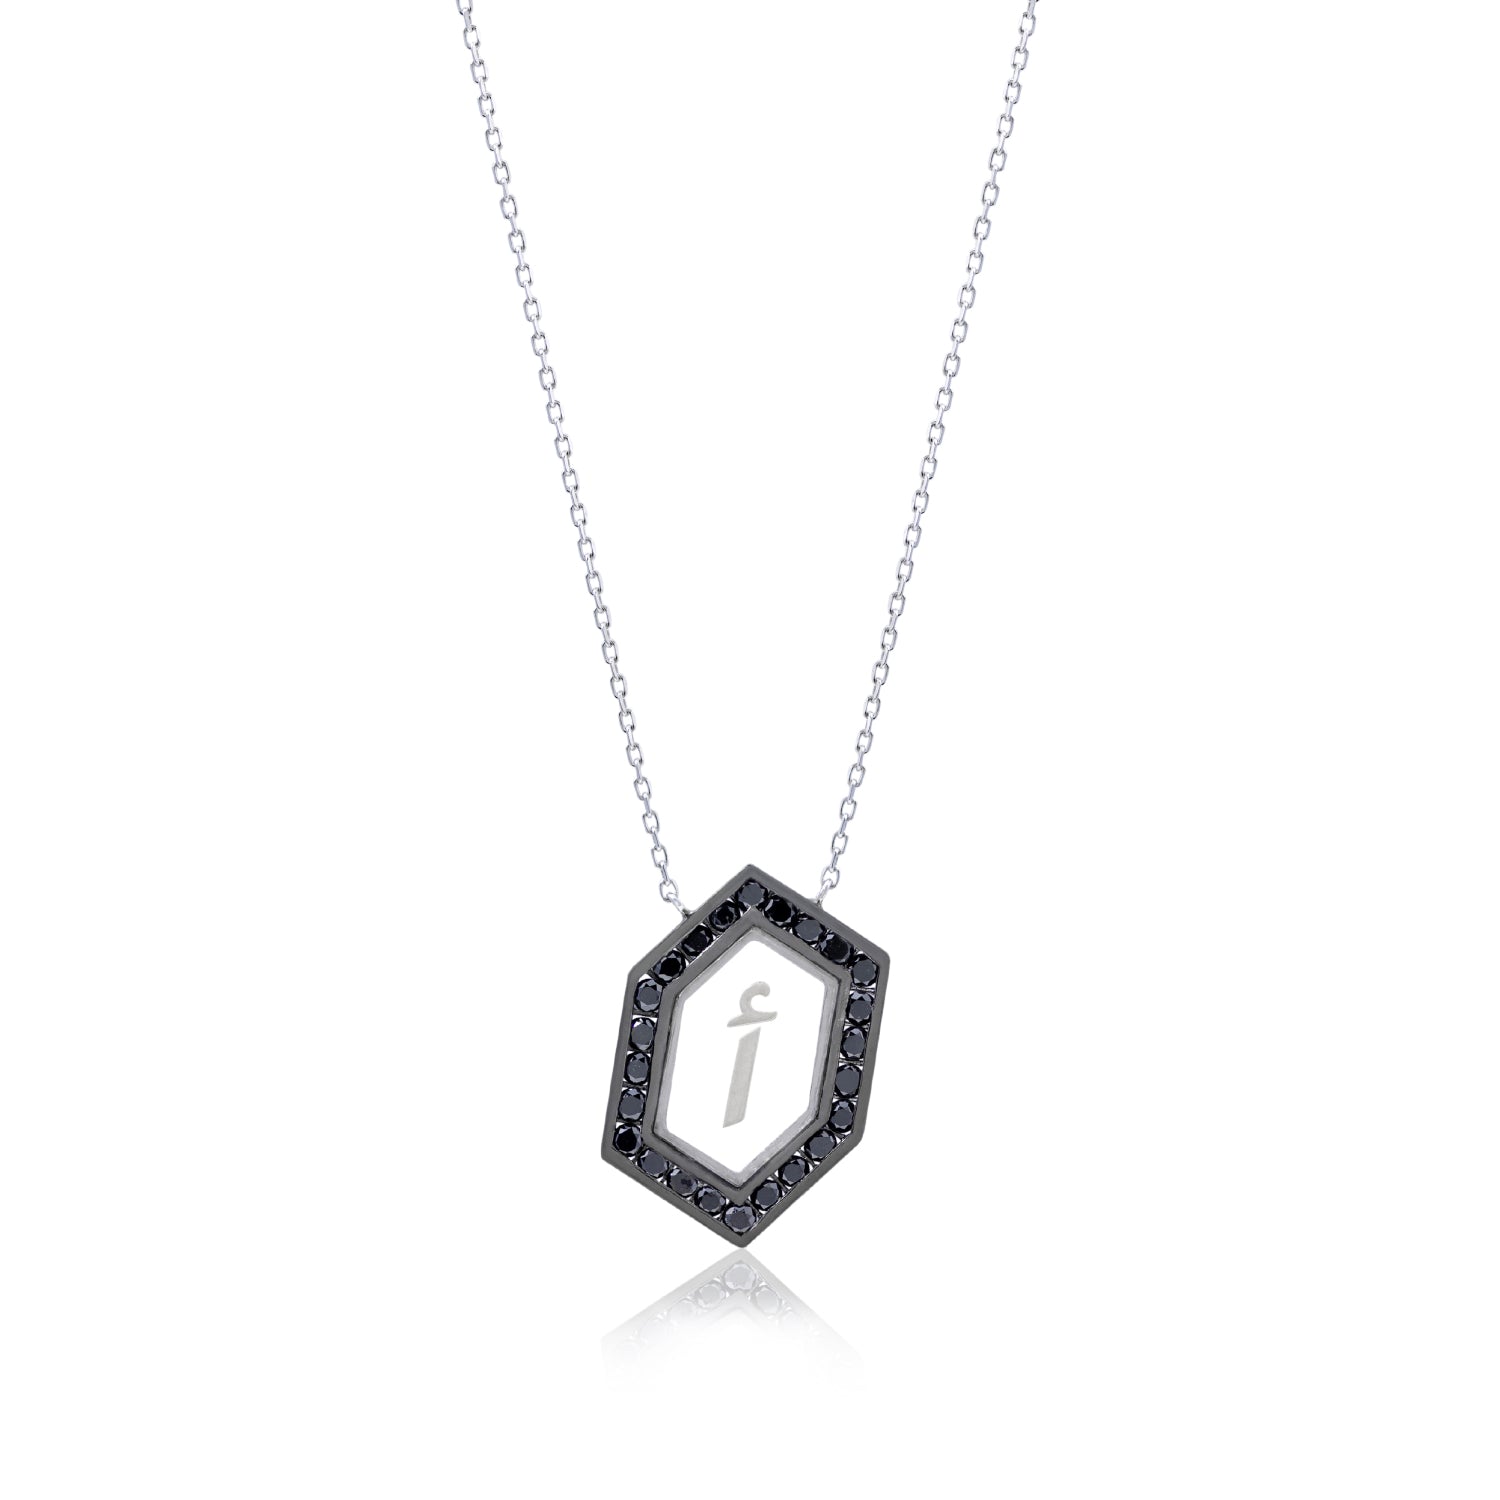 Qamoos 1.0 Letter أ Black Diamond Necklace in black Rhodium-Plated White Gold